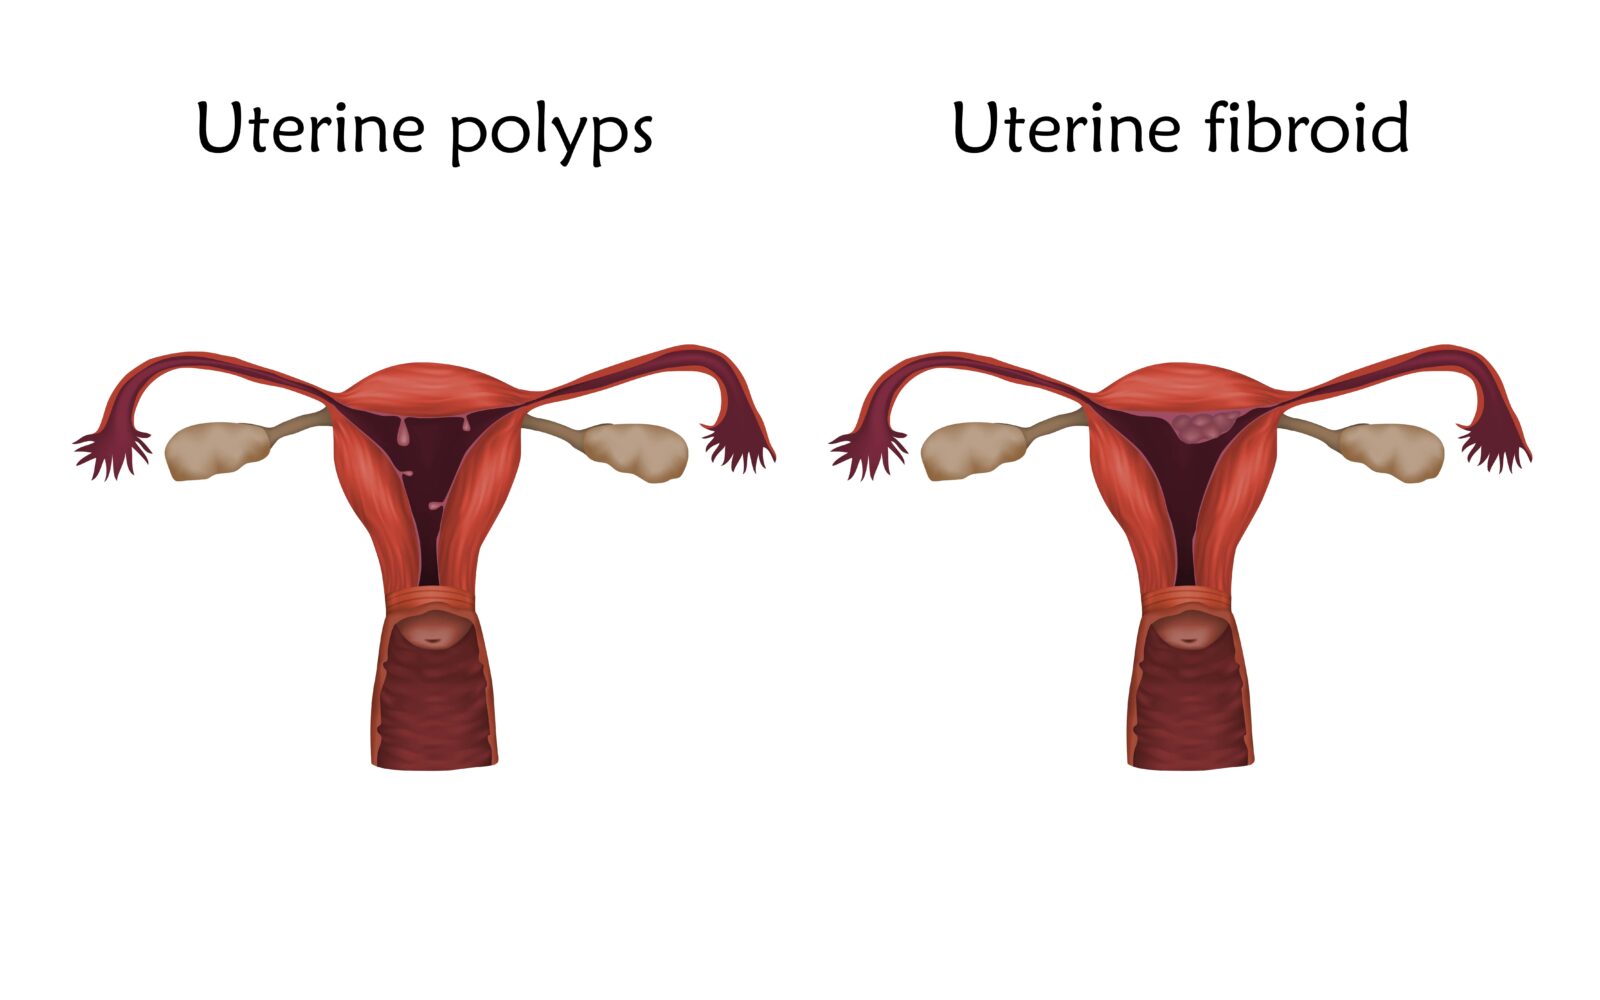 uterine polyps shown beside uterine fibroids